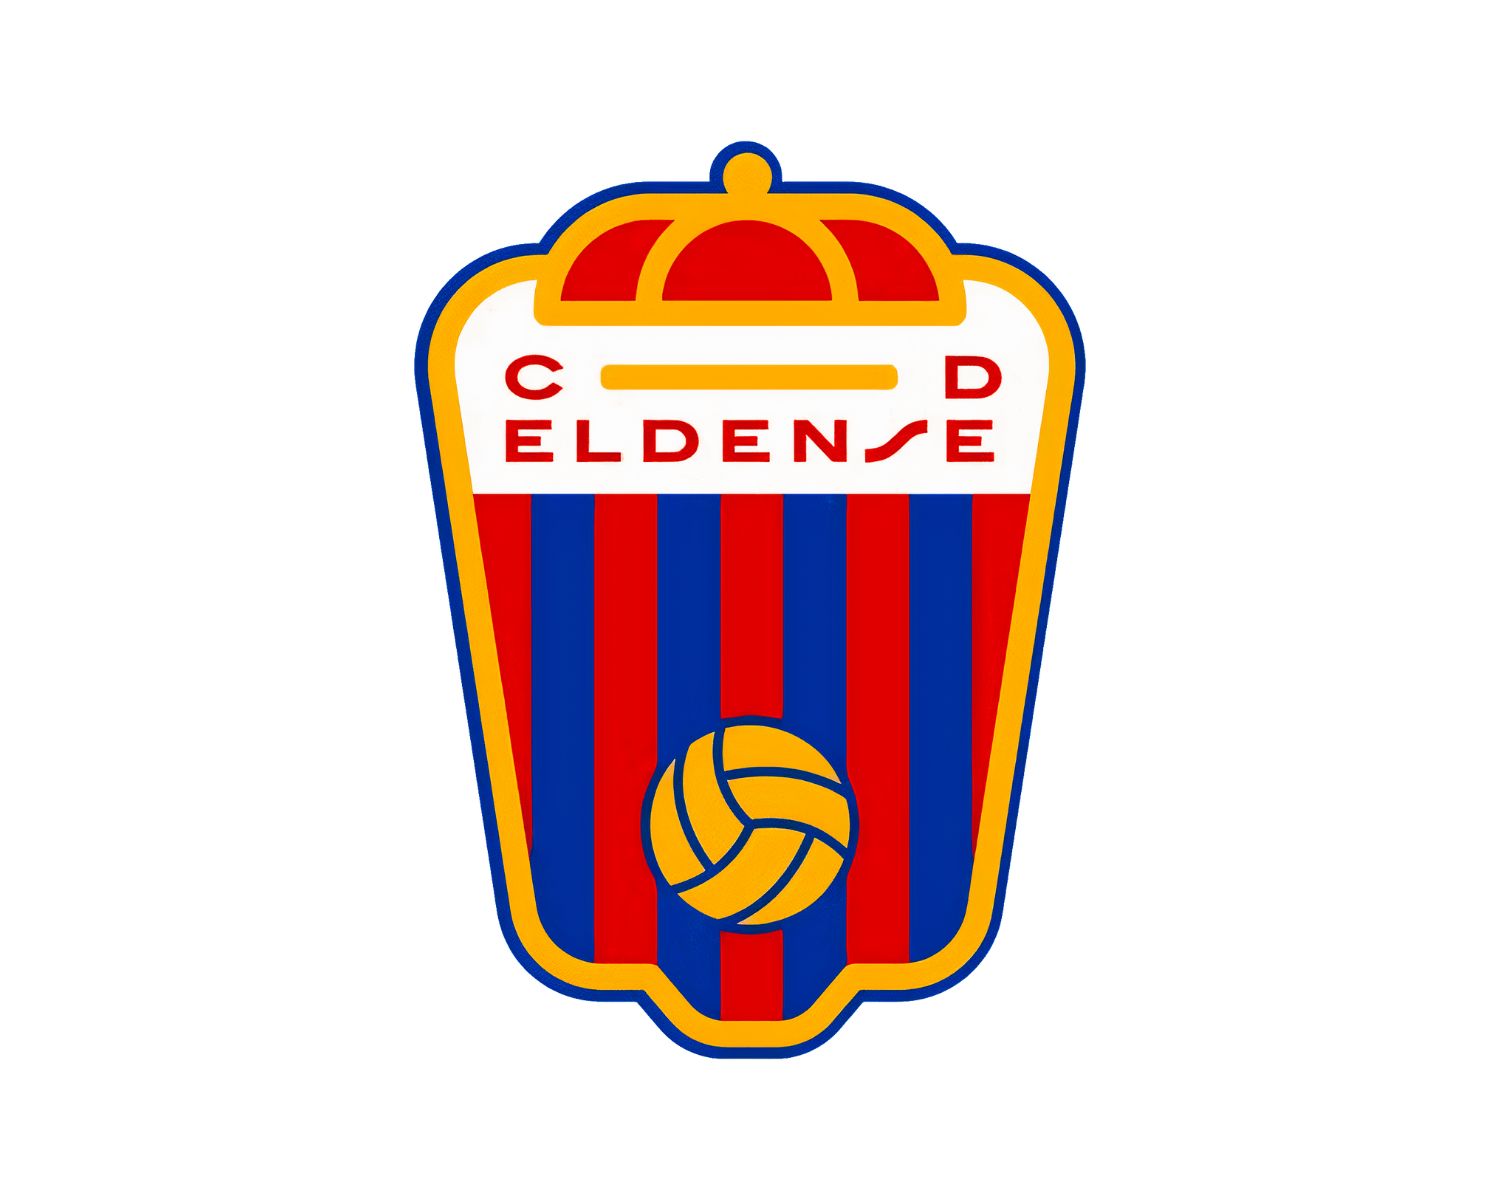 cd-eldense-13-football-club-facts